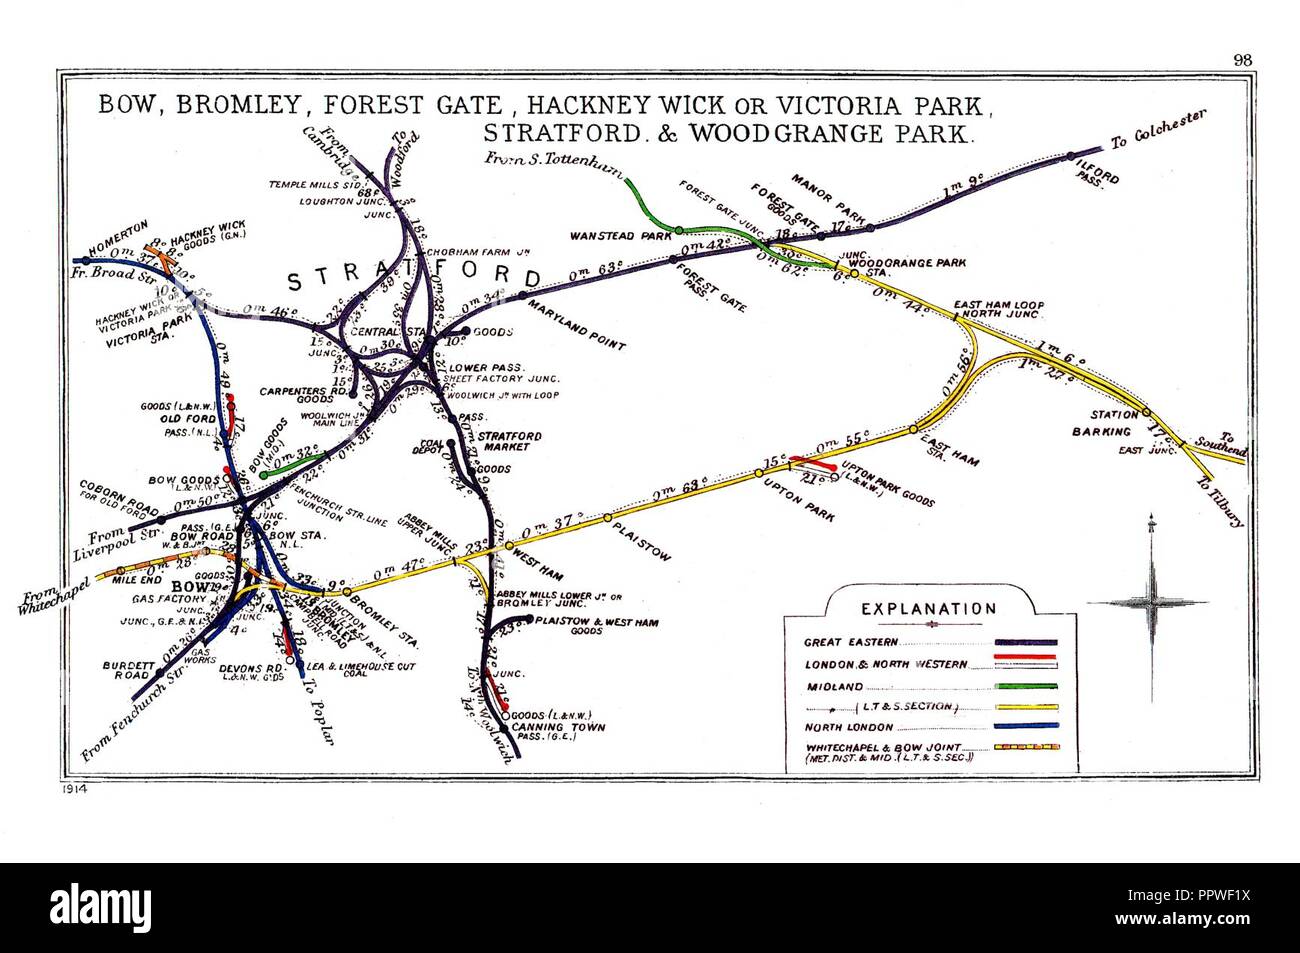 Bow, Bromley, Firest Gate, hackney stoppino o Victoria Park, Stratford & Woodgrange Park RJD 98. Foto Stock